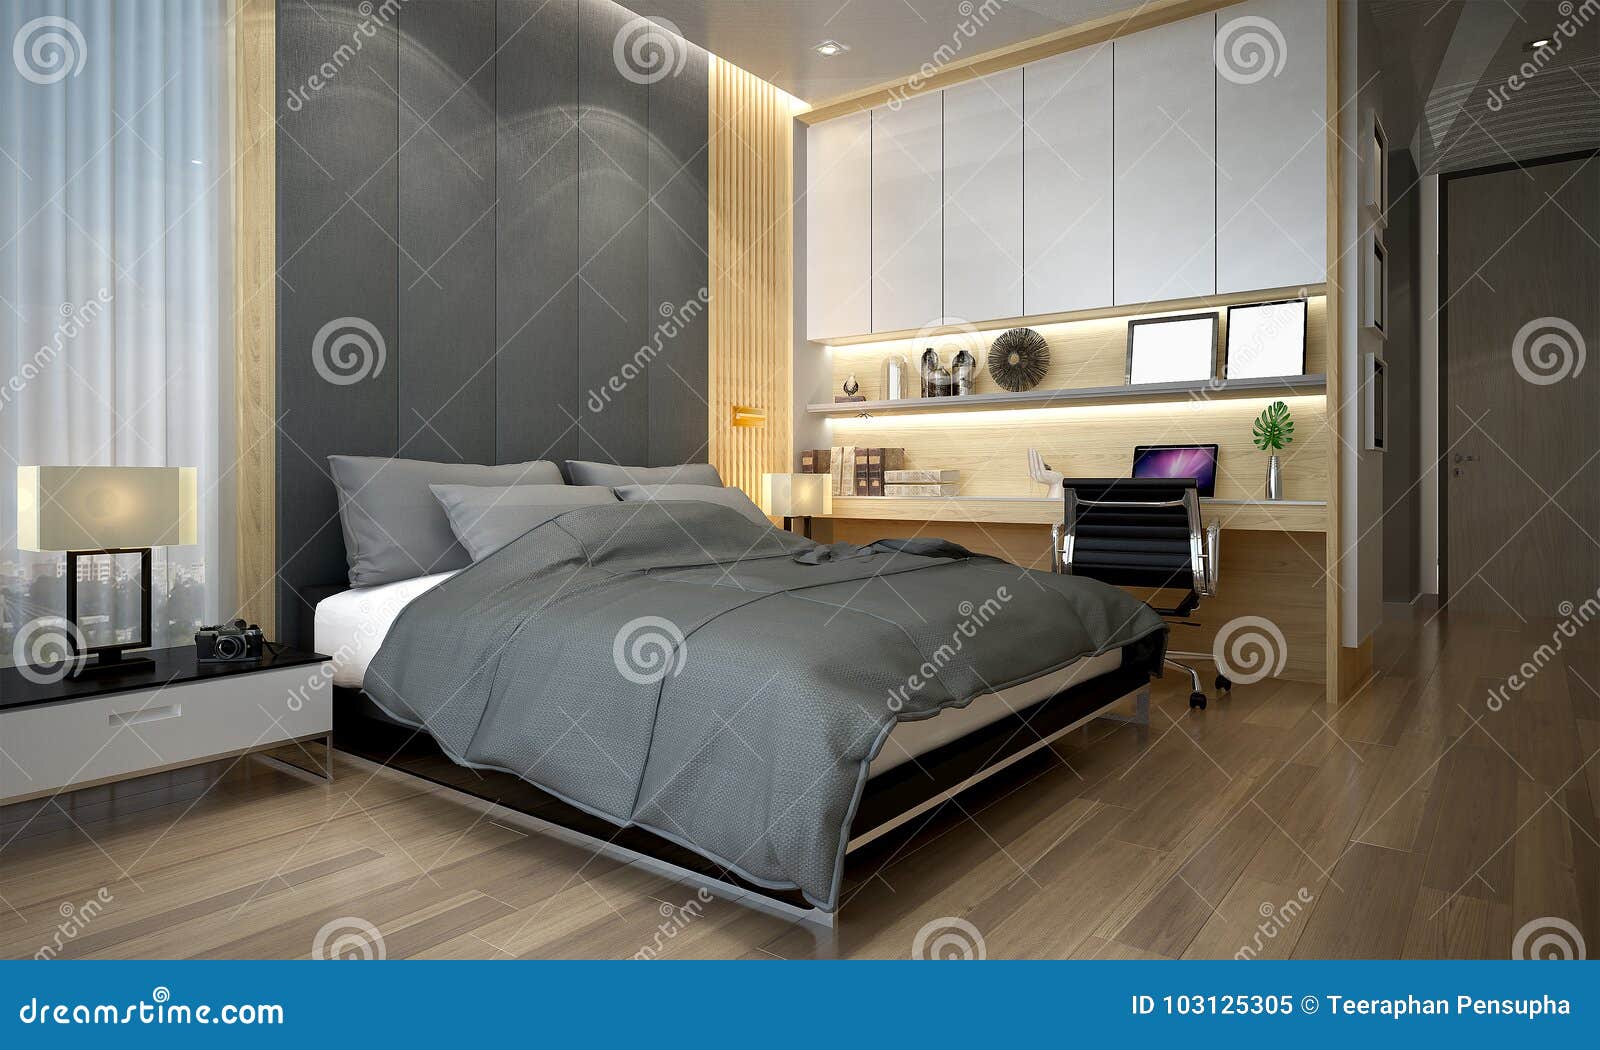 The Interiors Design Idea Of Modern Bedroom Stock